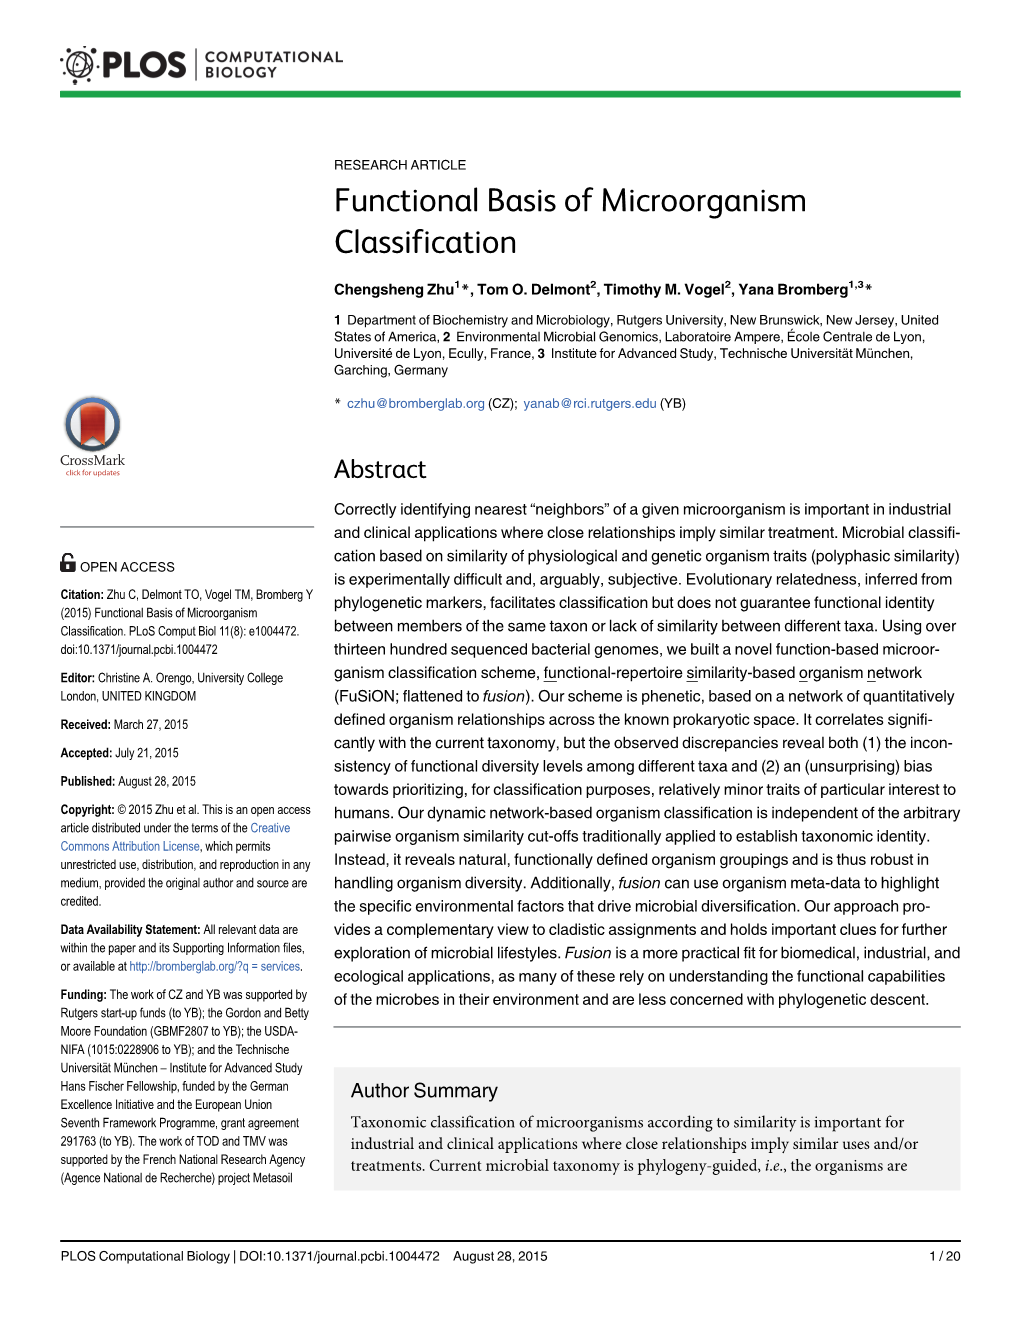 Functional Basis of Microorganism Classification